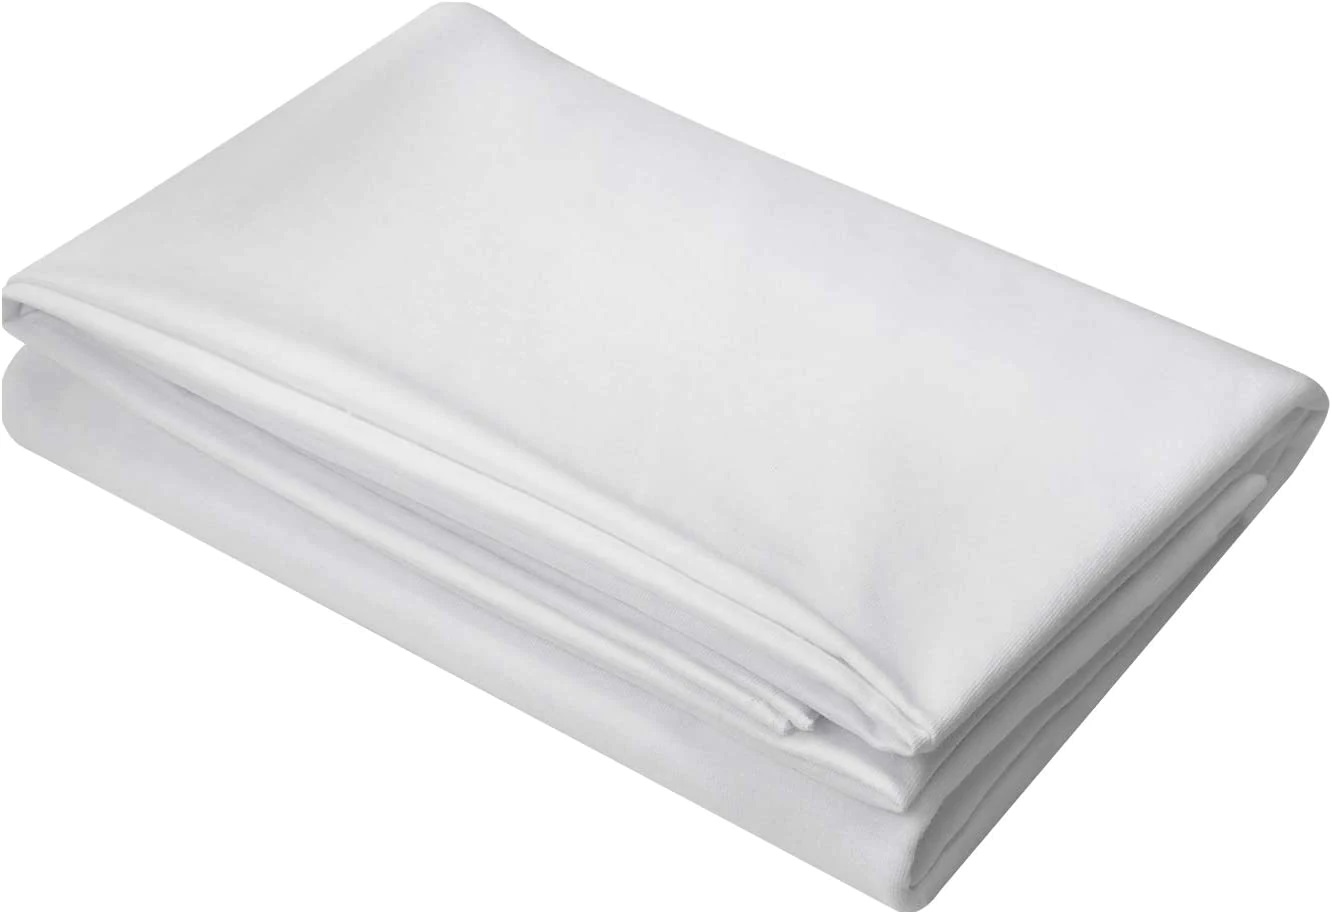 TC - 3  :  Table cloth - white